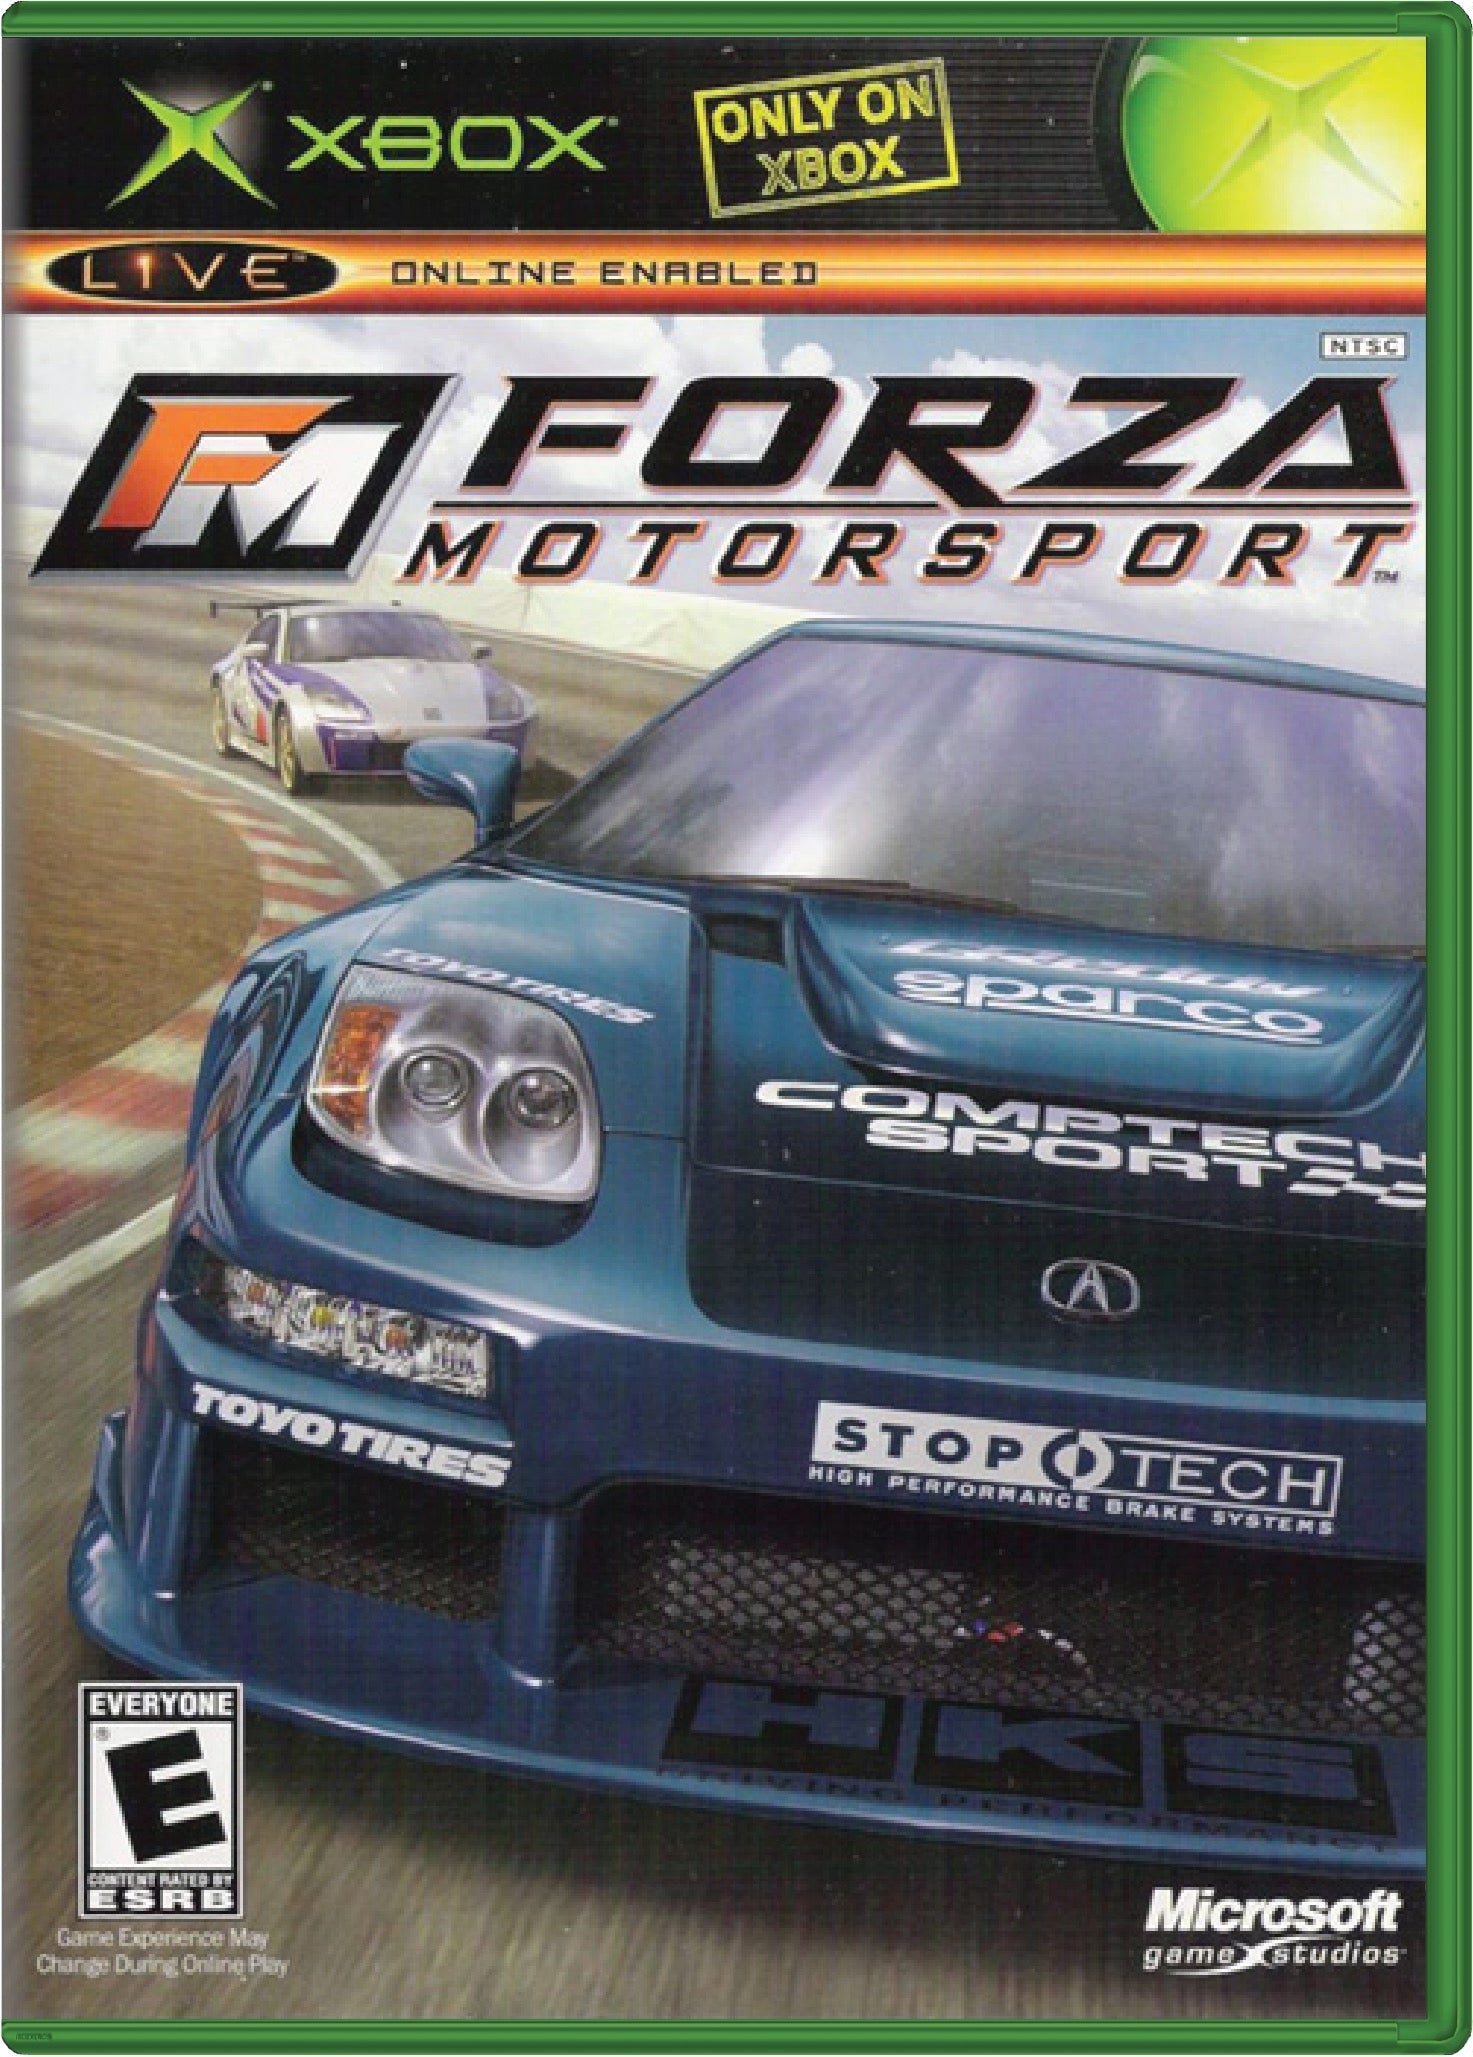 Forza Motorsport Cover Art